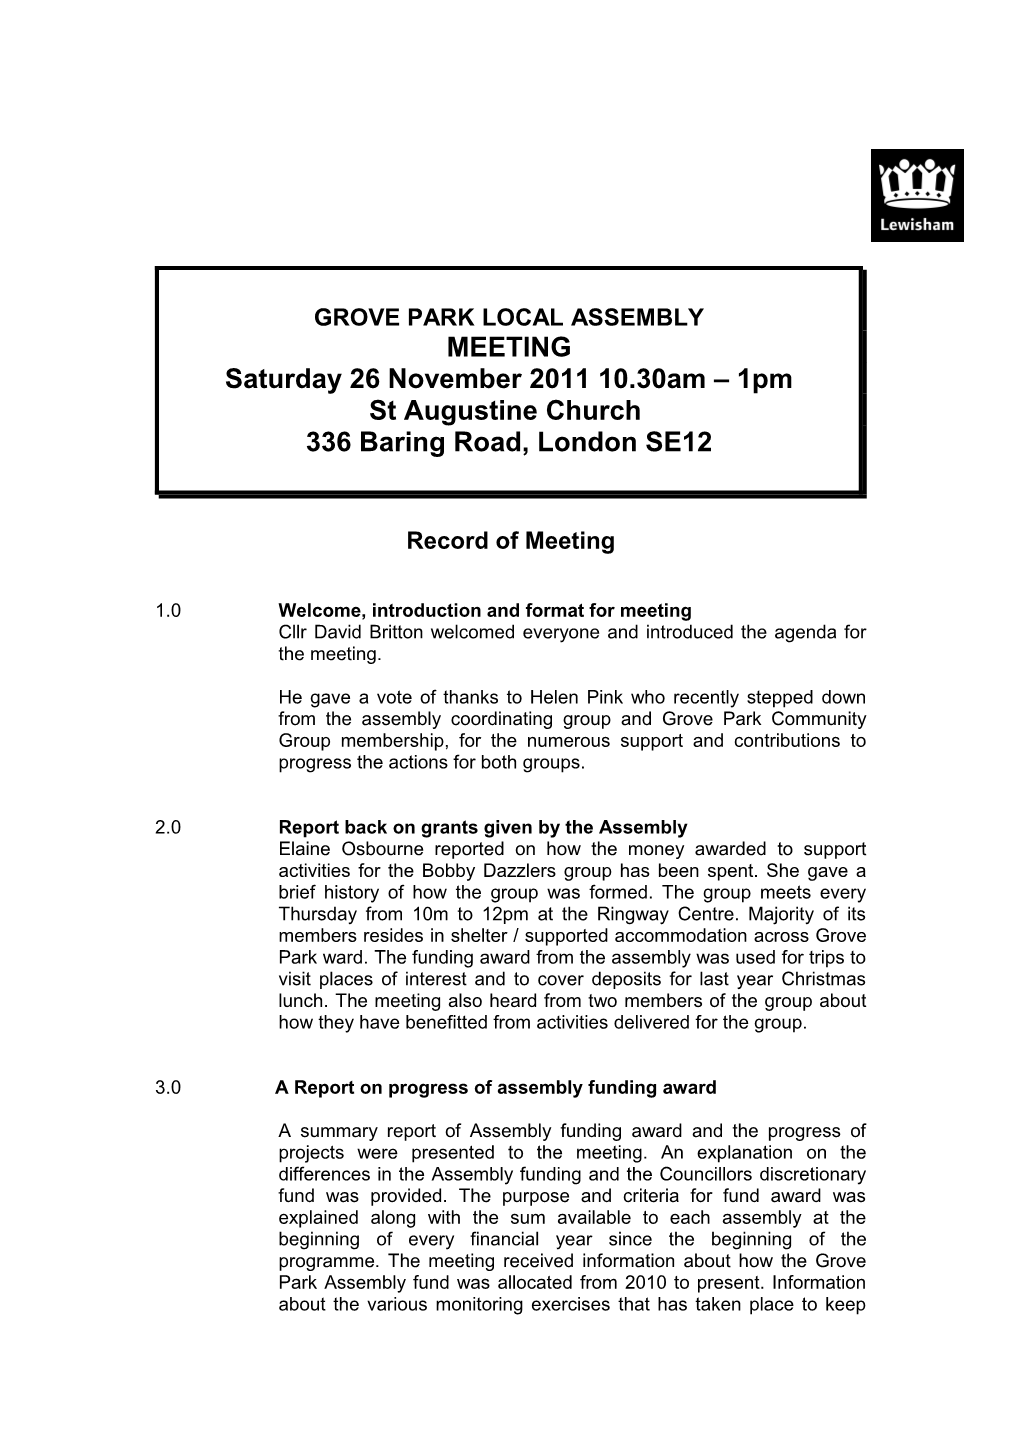 Grove Park Assembly Meeting 26 November 2011